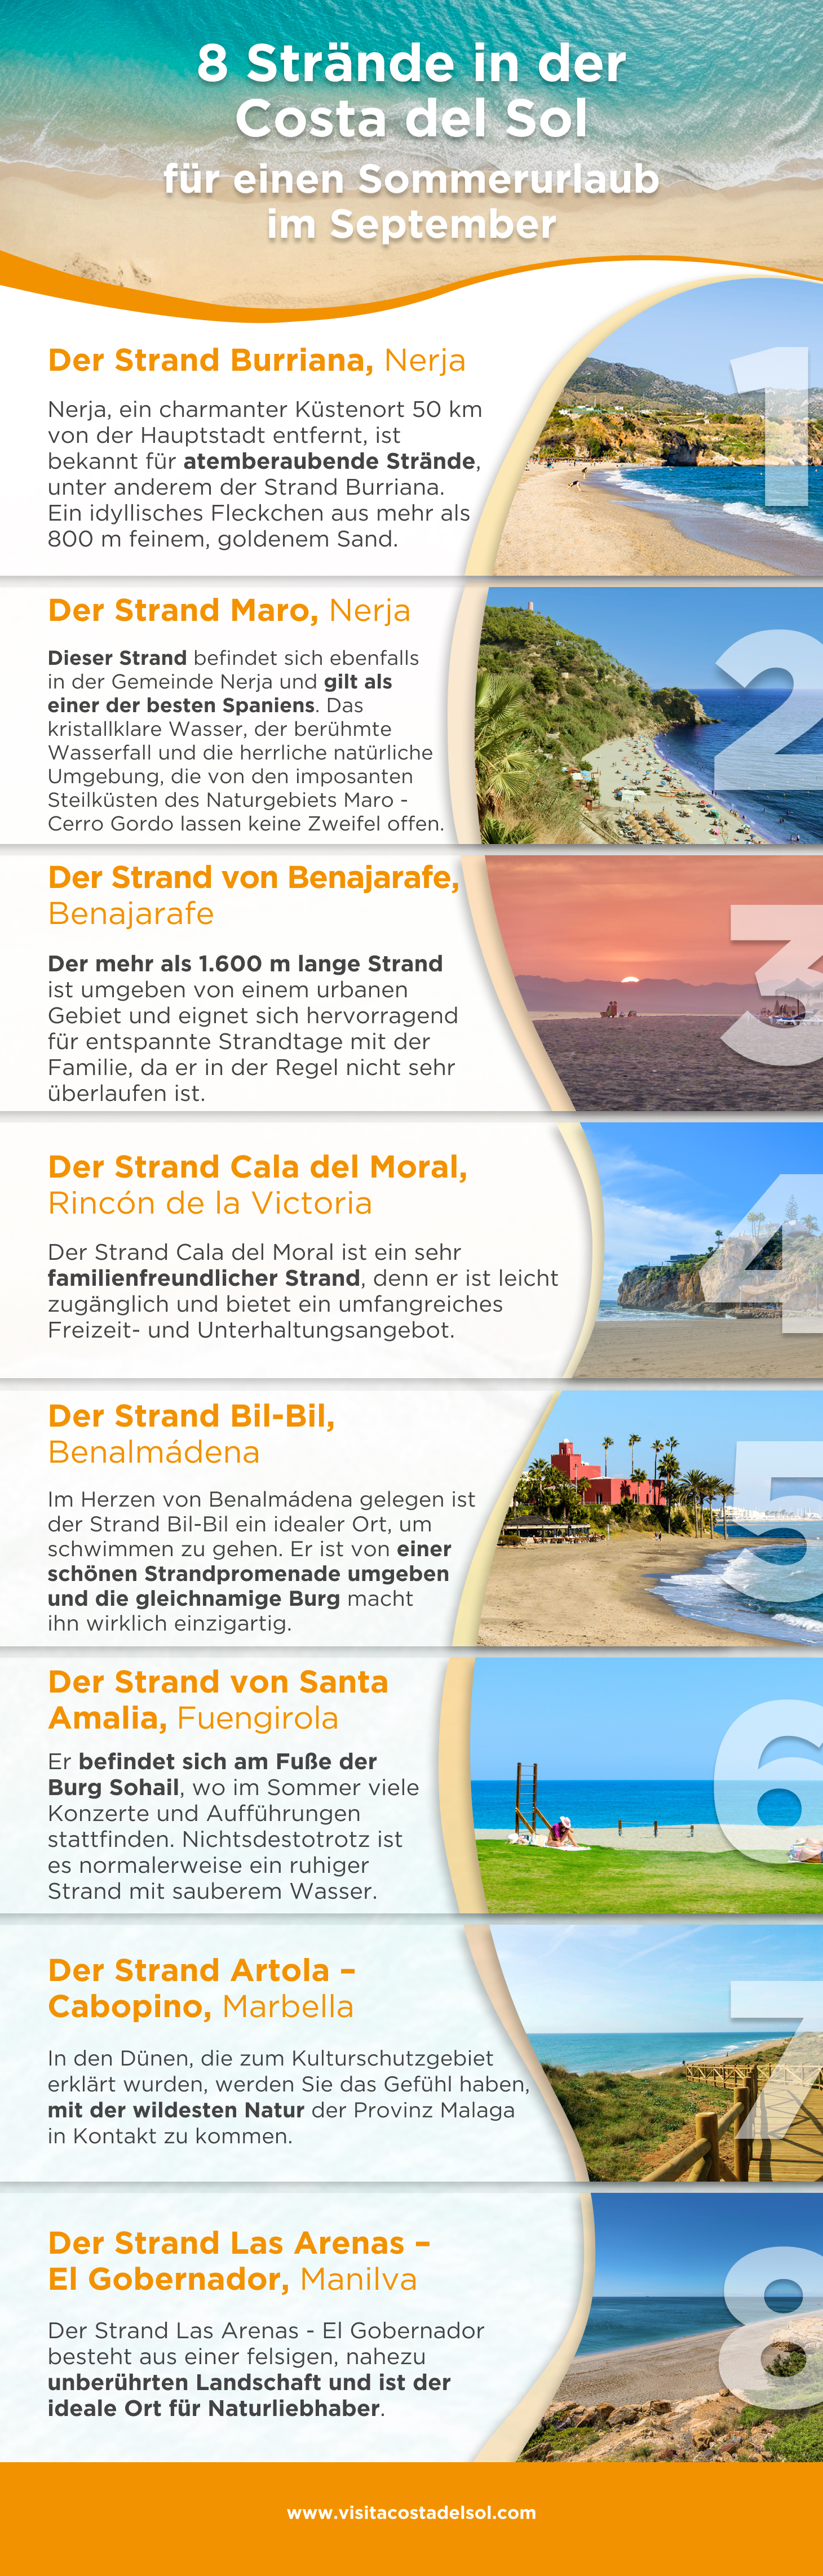 csol_infografia_8 playas septiembre_DE